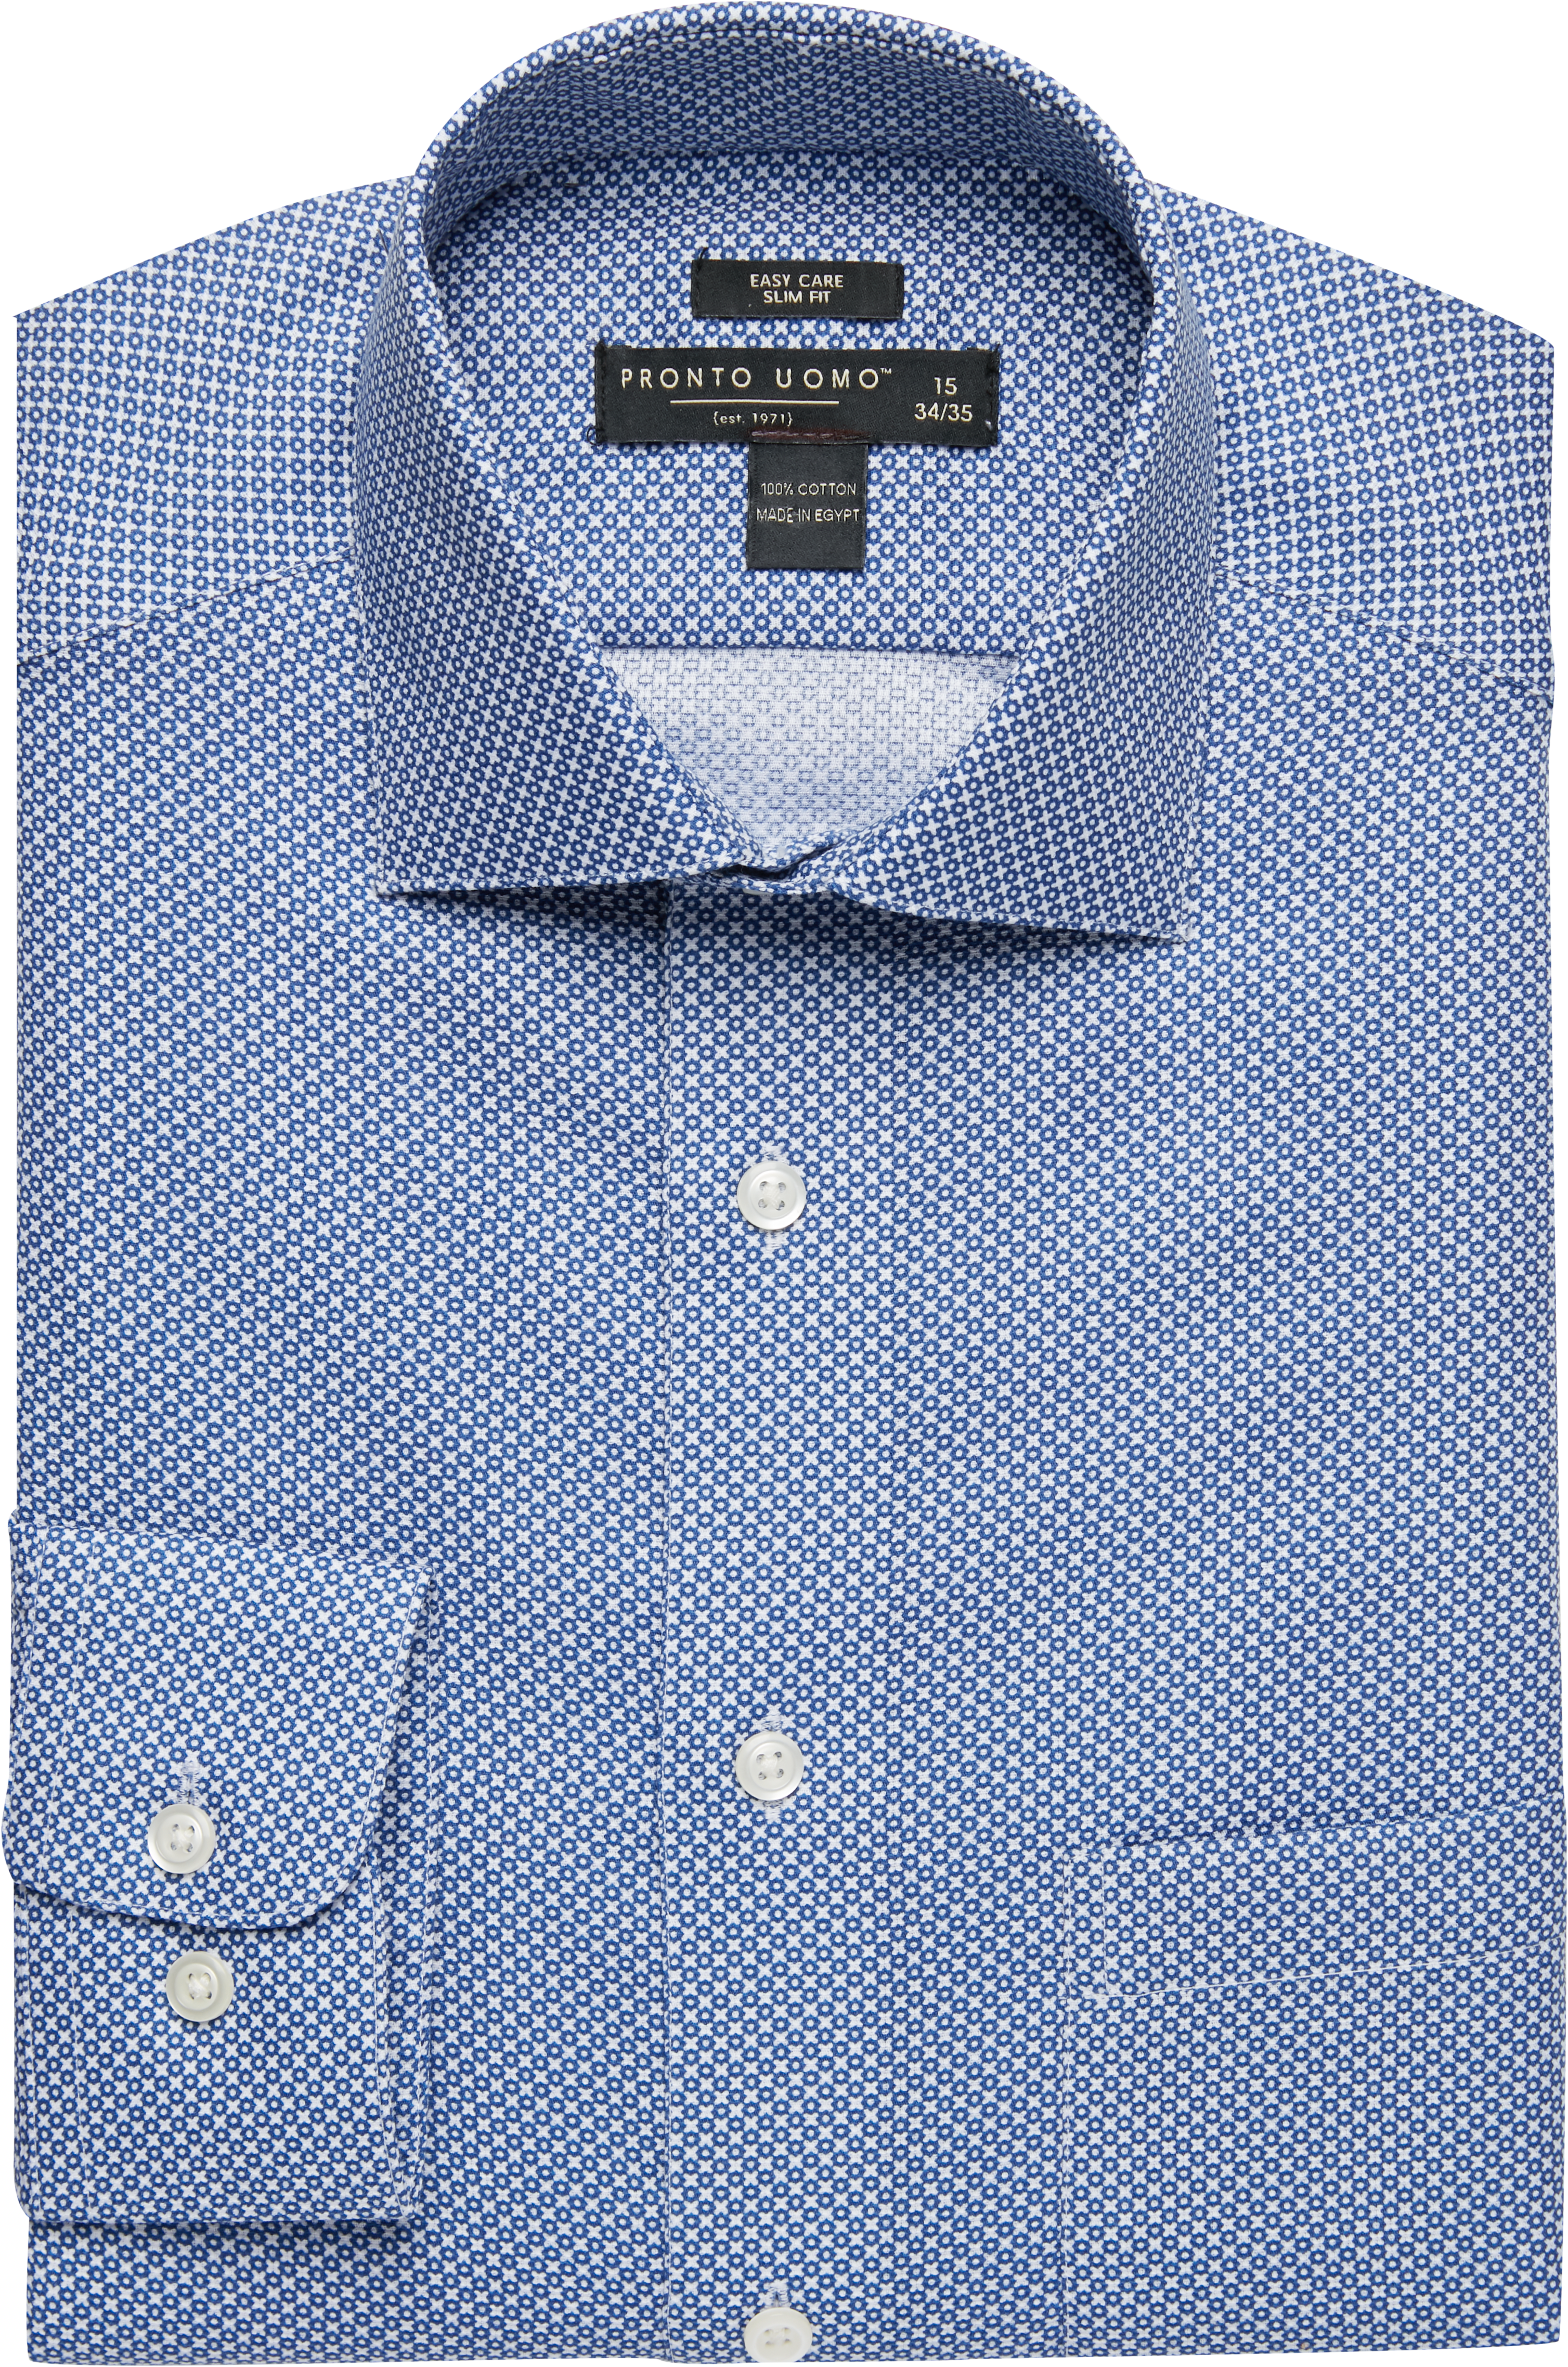 Pronto Uomo Navy Circle Print Slim Fit Dress Shirt - Men's Sale | Men's ...